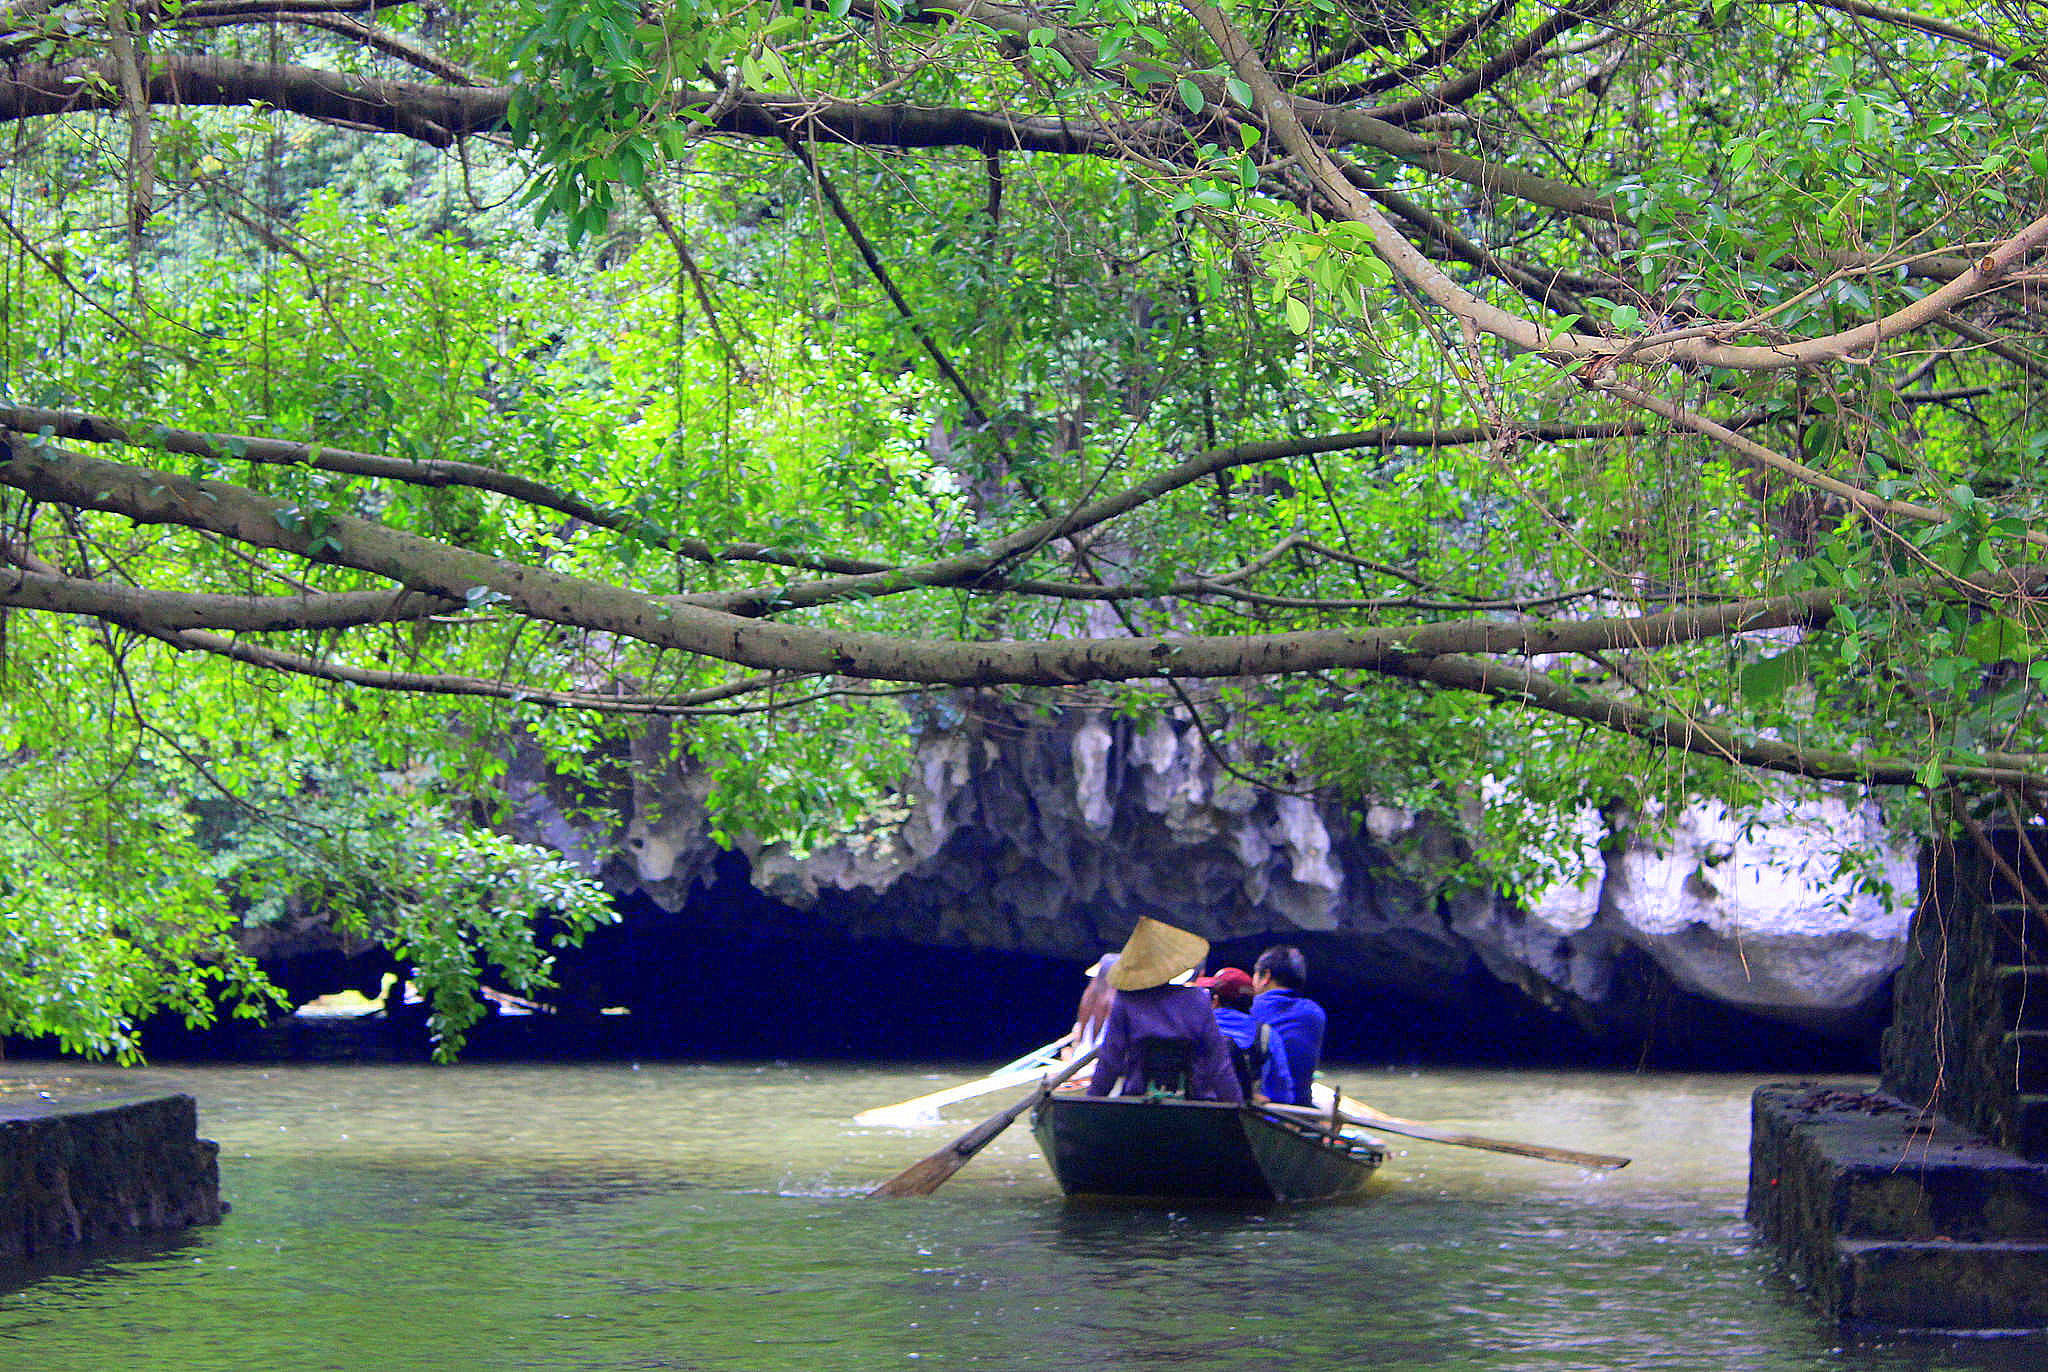 Boat ride in Tam Coc